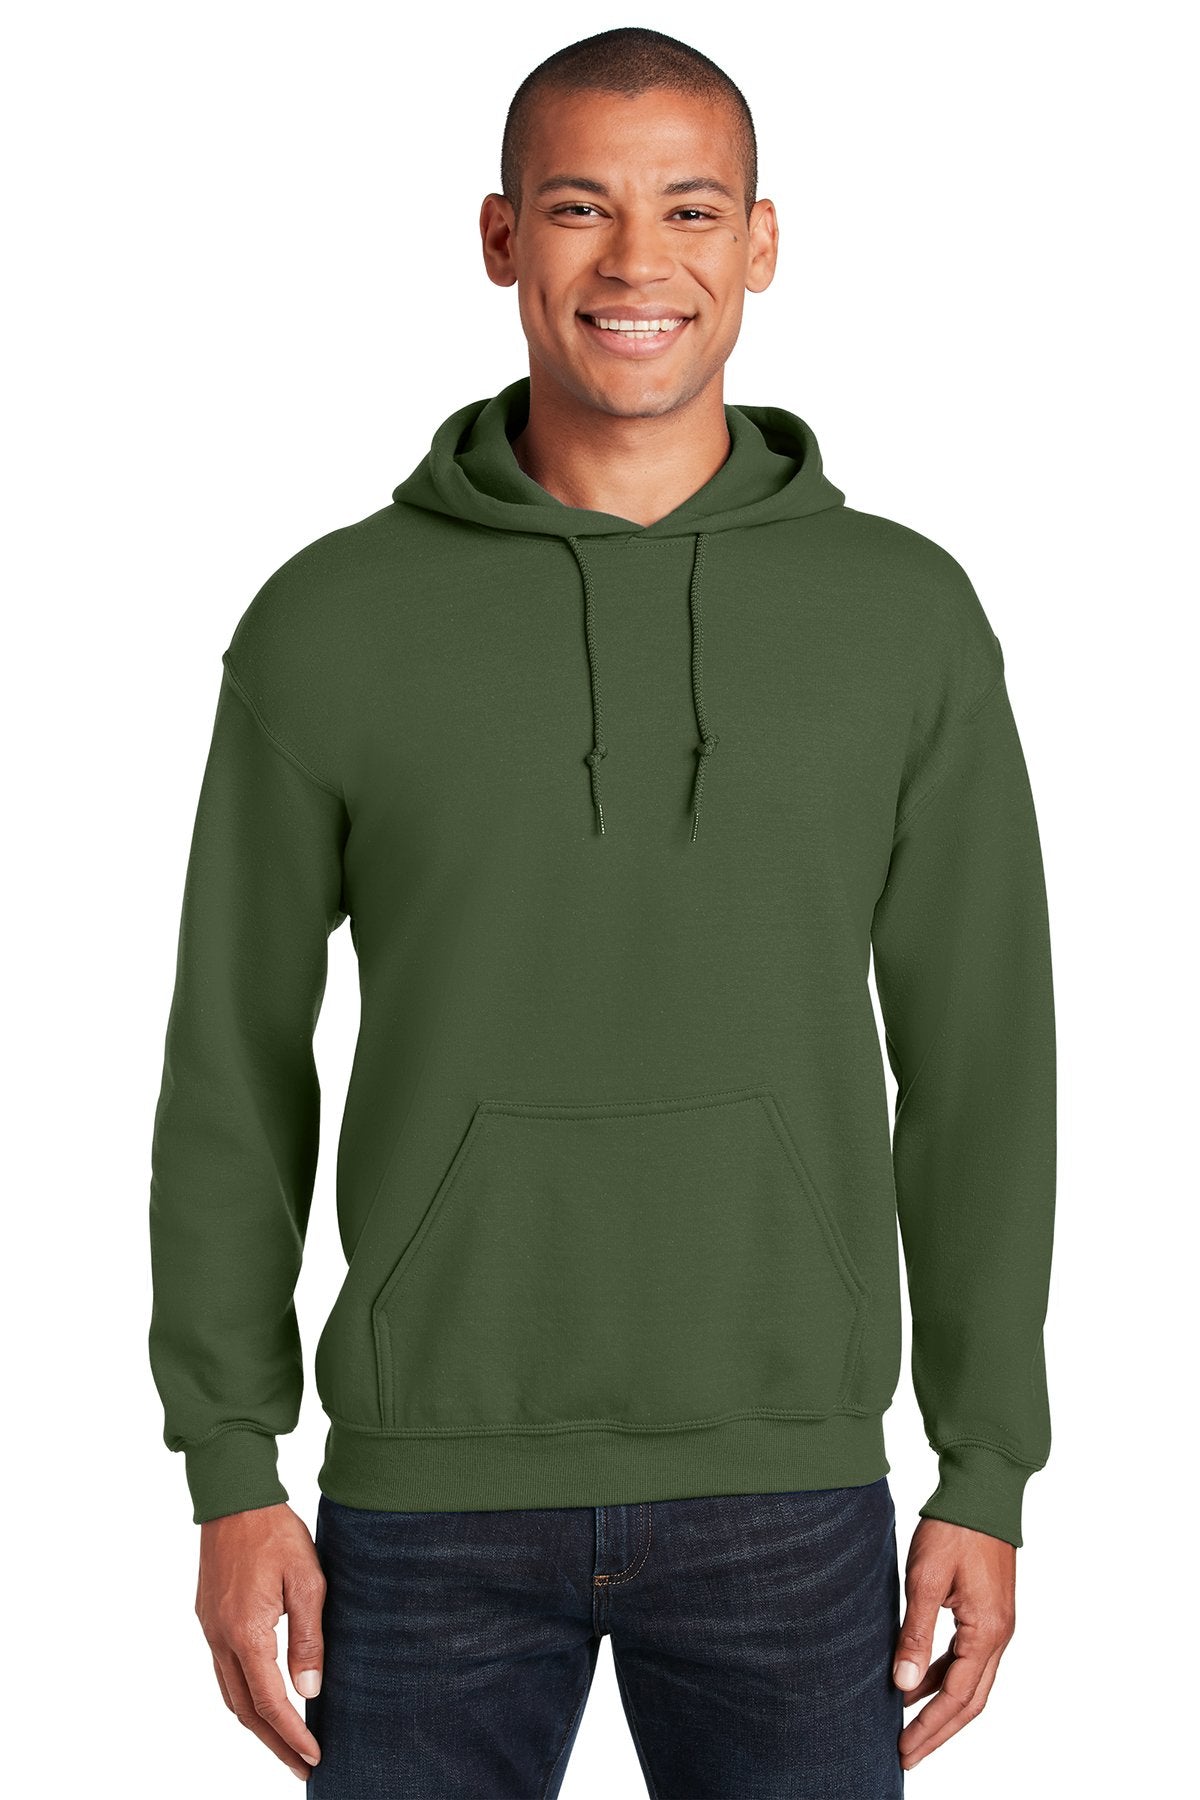 Gildan Military Green 18500 business sweatshirts with logo